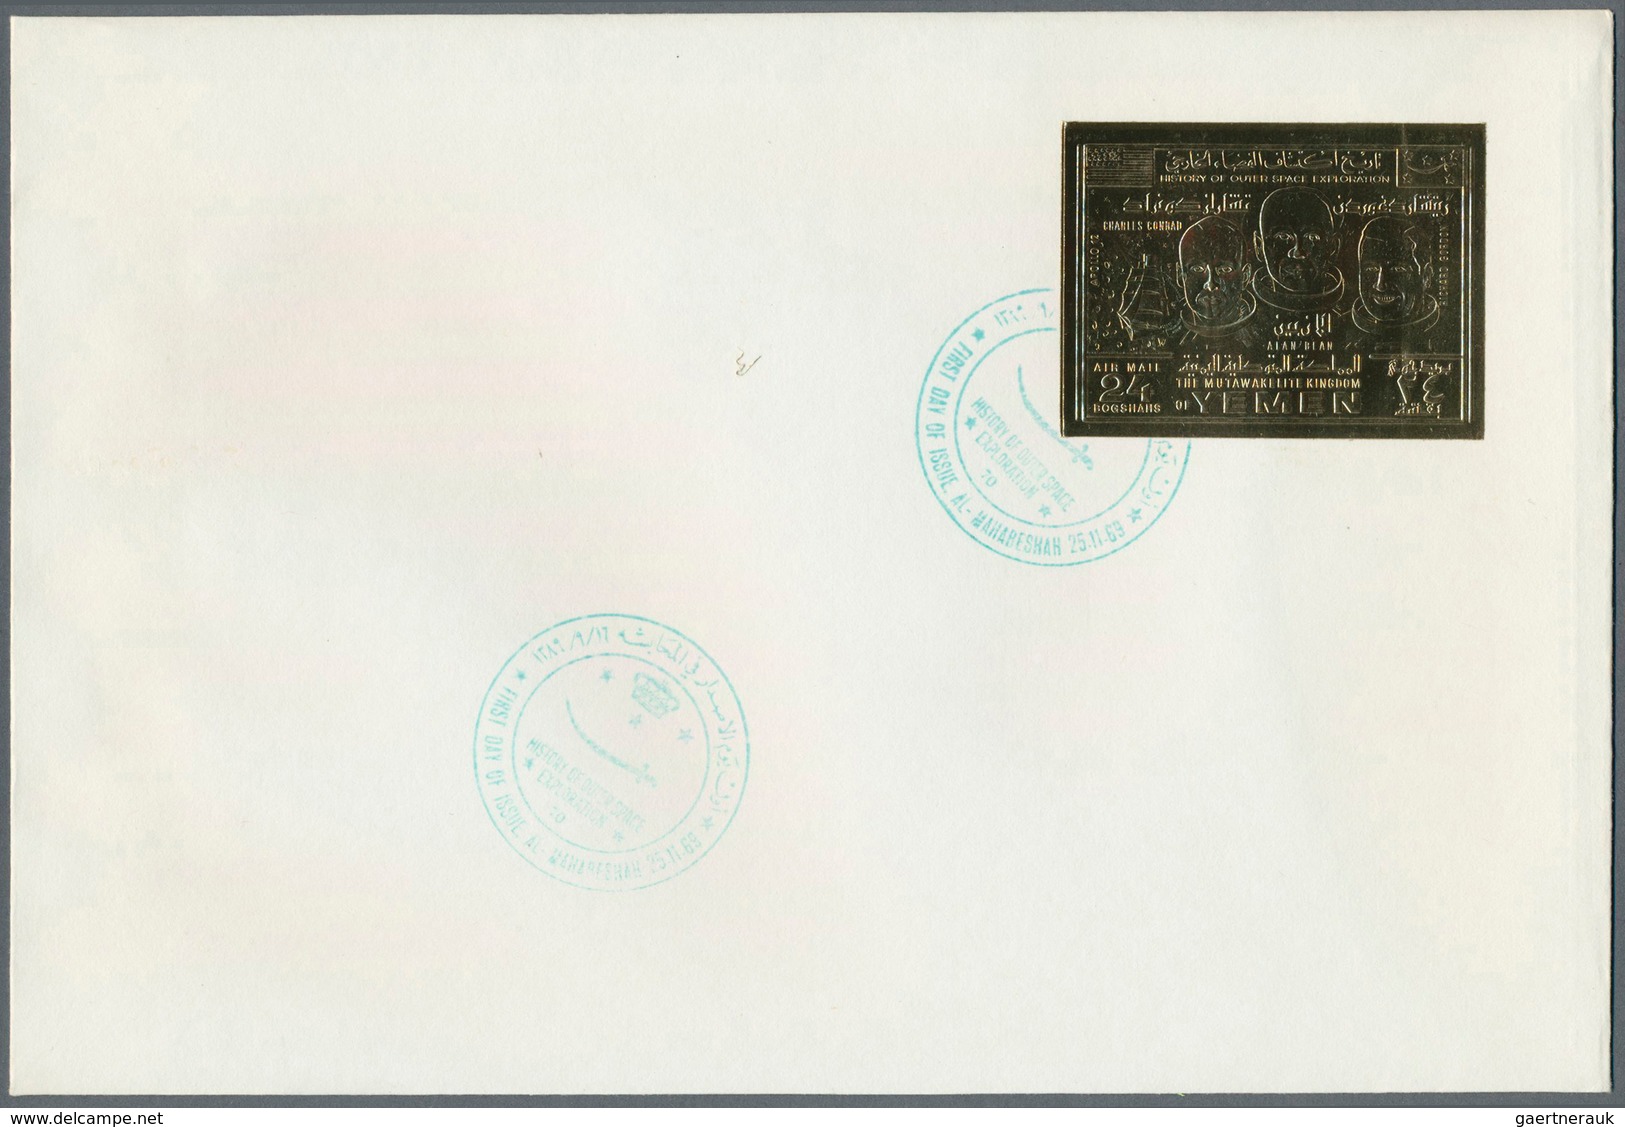 Thematik: Raumfahrt / astronautics: 1969/1972, Yemen (YAR/Kingdom), group of 33 envelopes bearing th